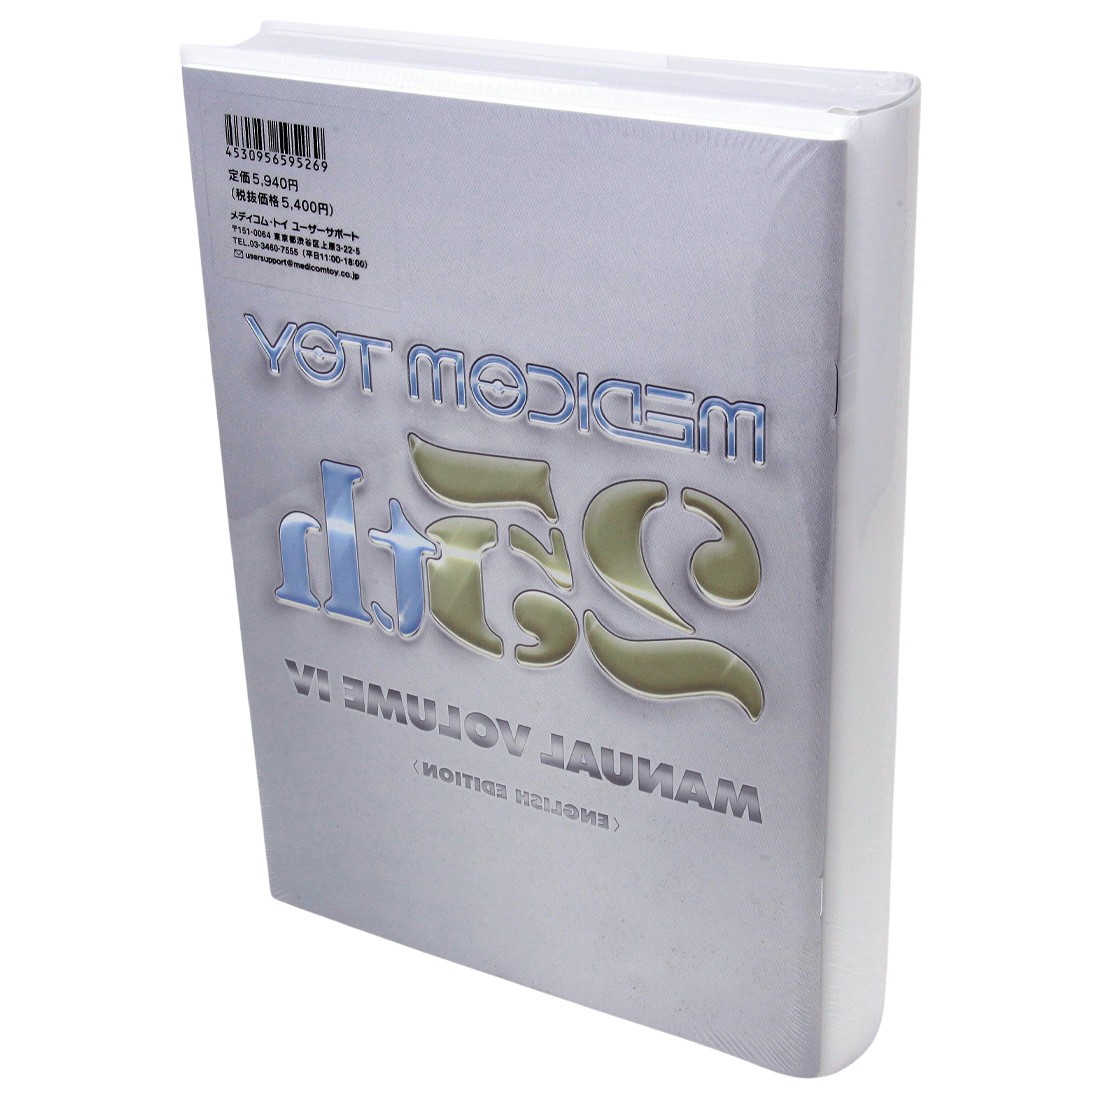 Medicom Toy 25th Anniversary Book - Manual Volume IV white